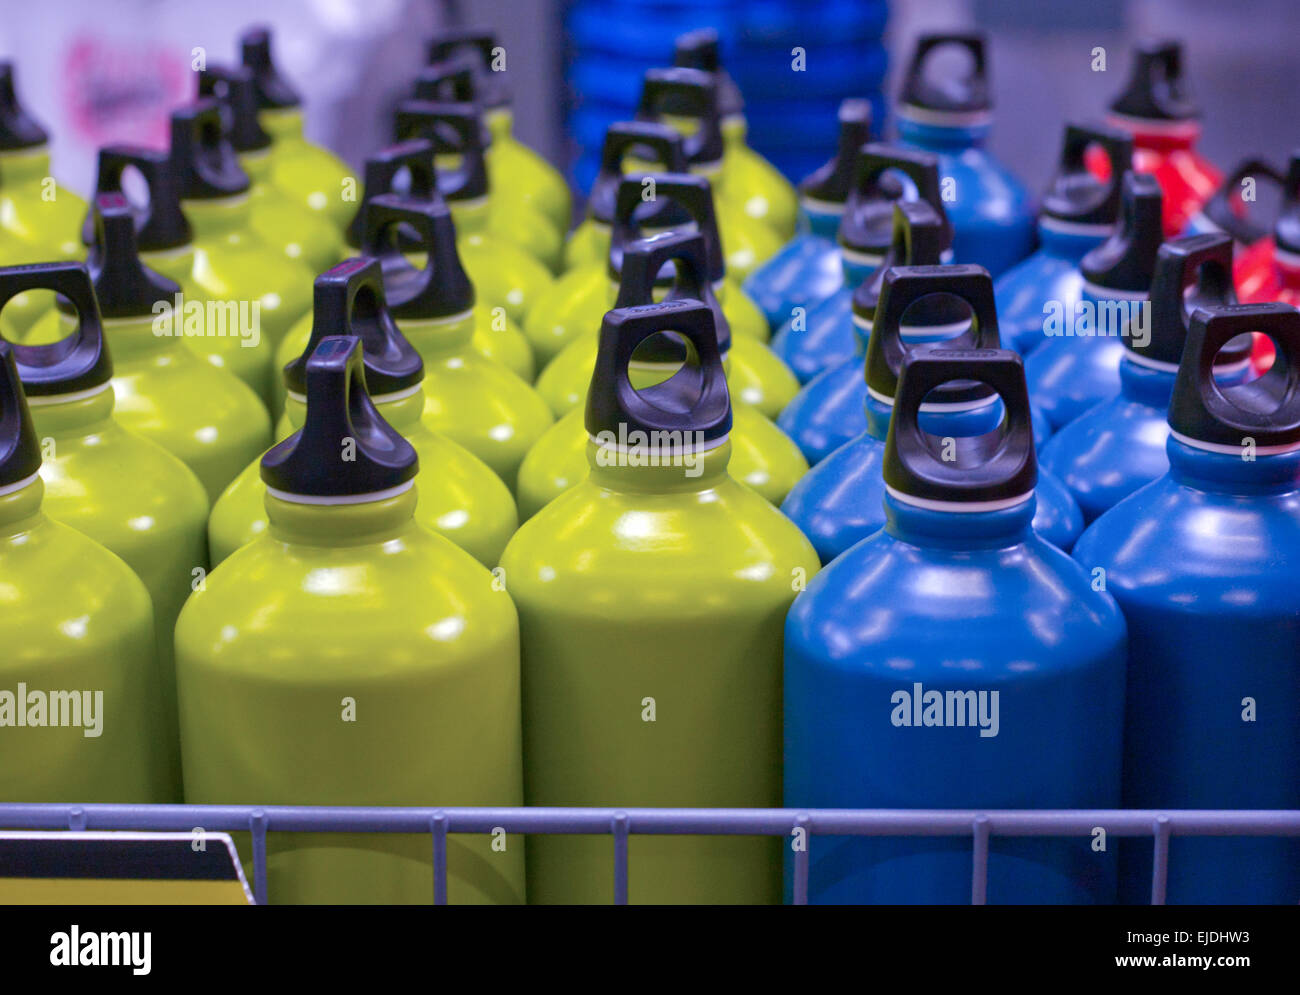 https://c8.alamy.com/comp/EJDHW3/box-full-of-aluminum-metallic-water-bottles-in-the-market-ready-to-EJDHW3.jpg